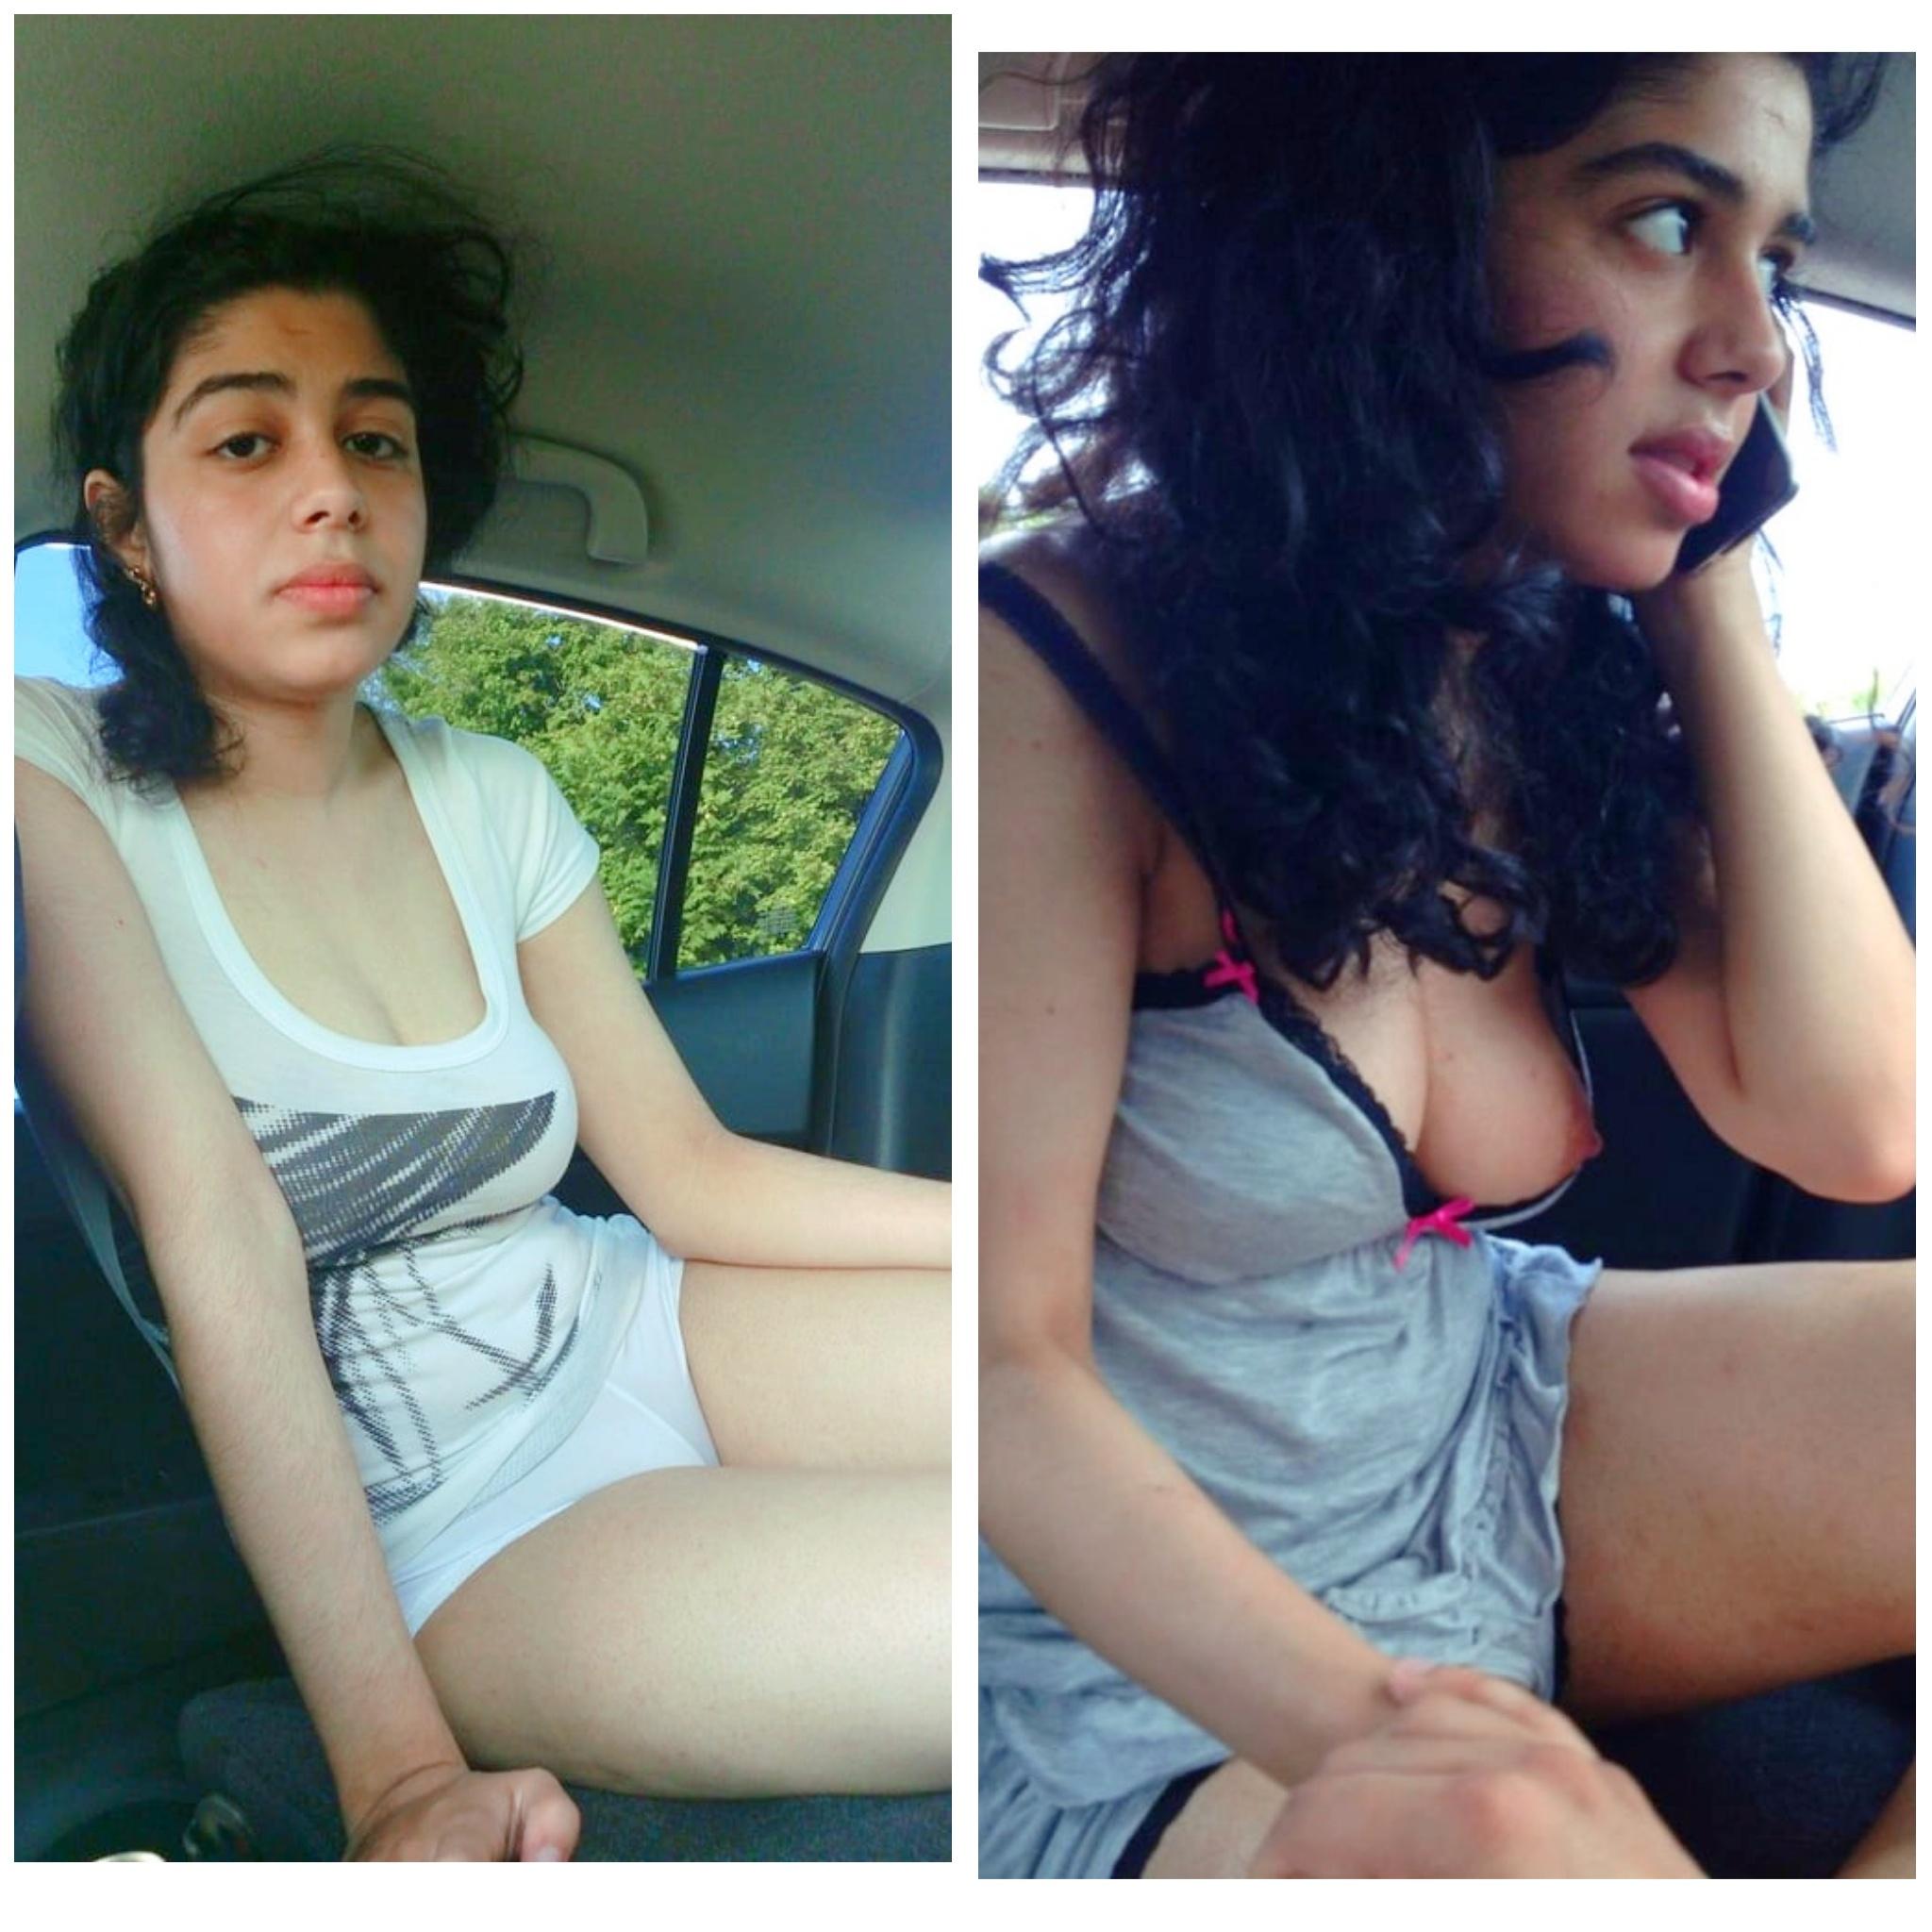 Paki Cute Amateur Girl Nipple Slip in Car 😍😍❤️❤️ FULL ALBUM IN COMMENT 🔥🔥👇👇 Scrolller pic pic